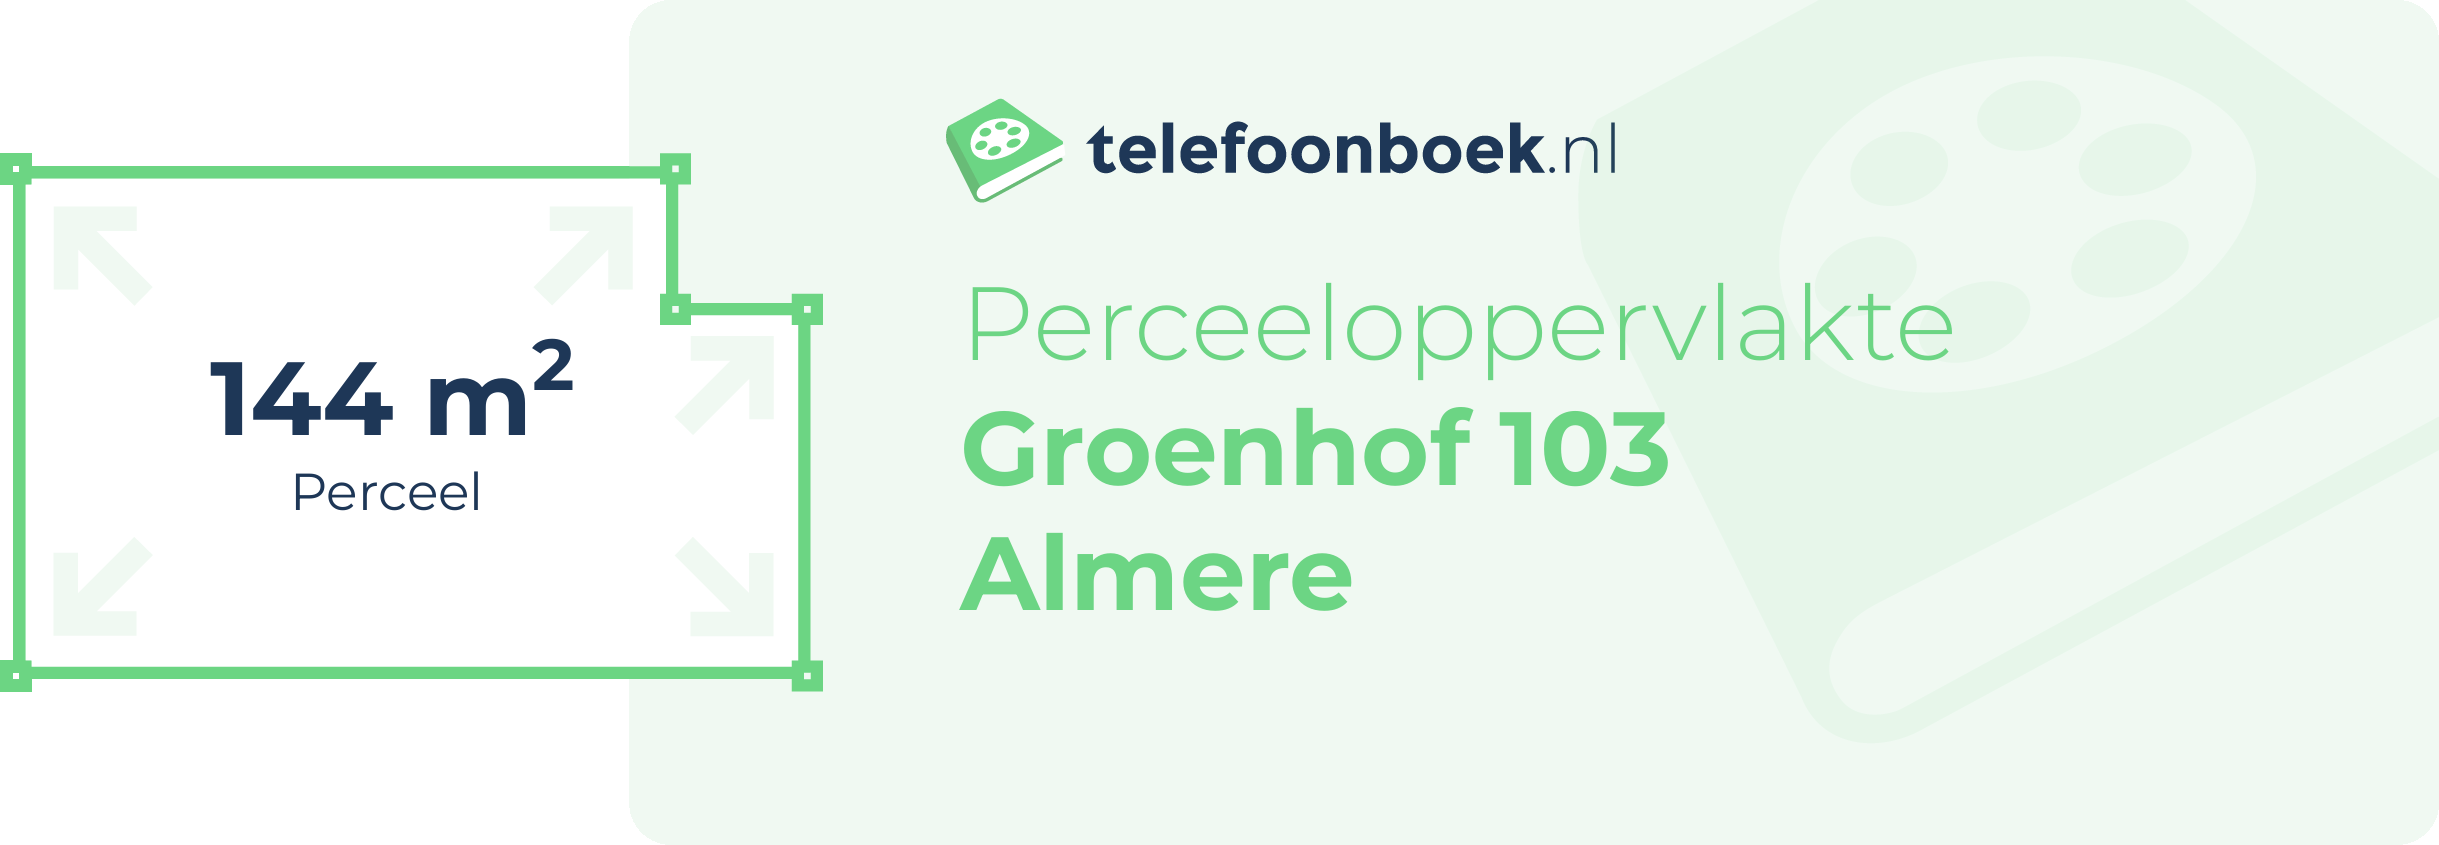 Perceeloppervlakte Groenhof 103 Almere